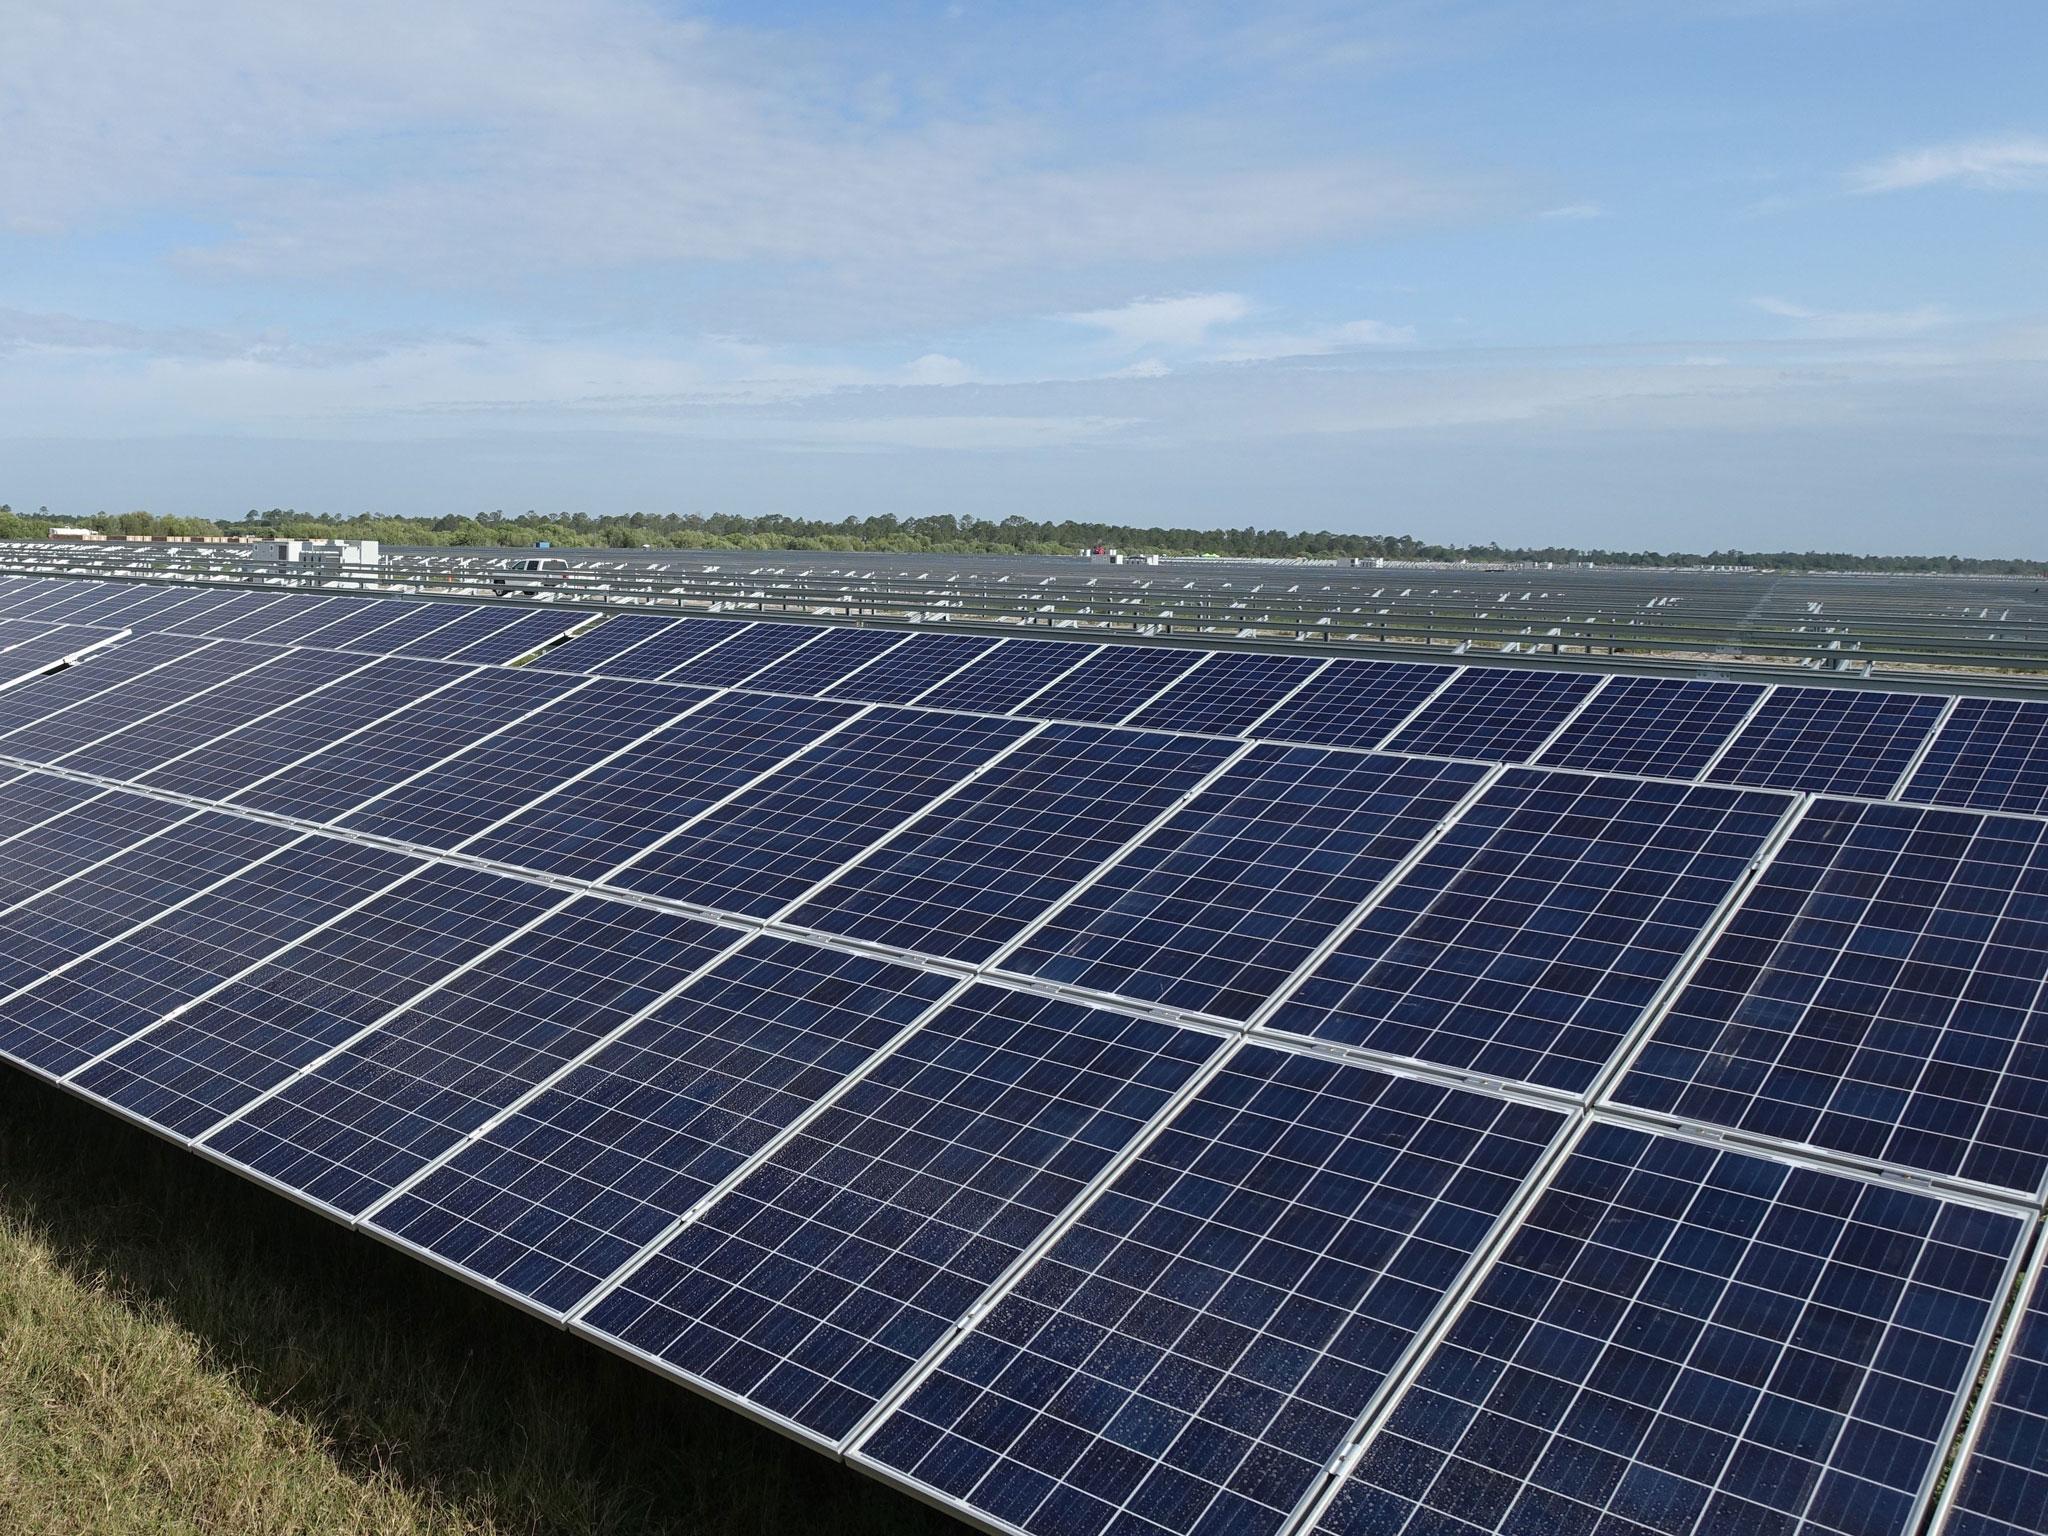 Solar panels Kerry Sherridan/Getty